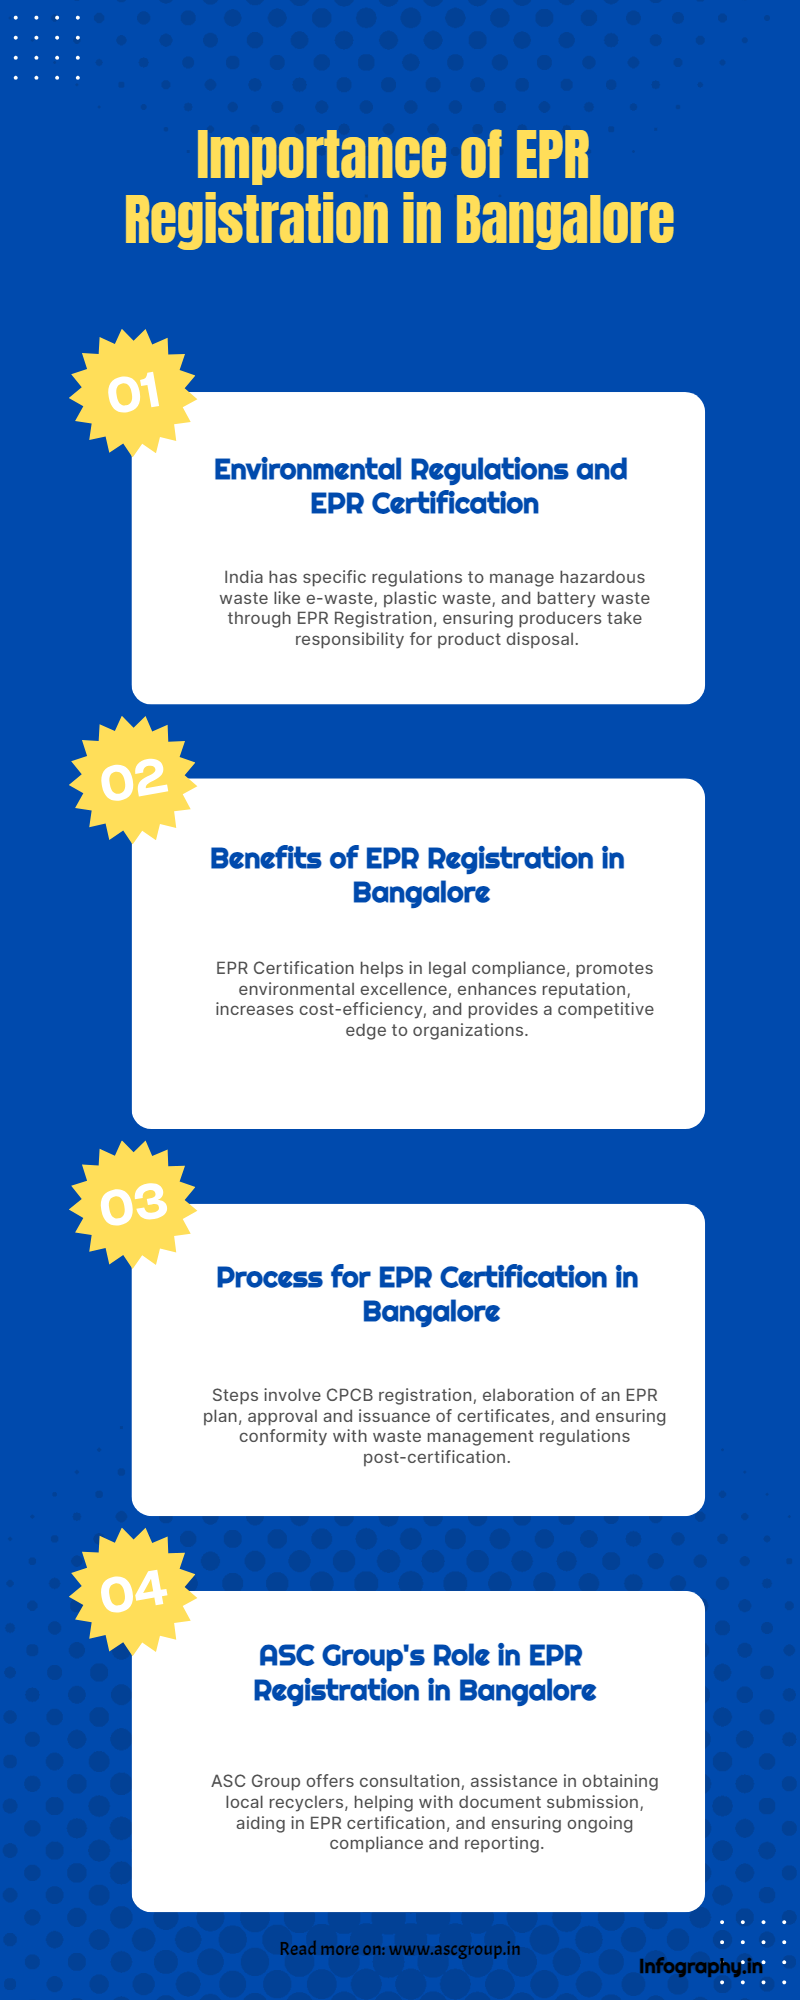 EPR Registration in Bangalore